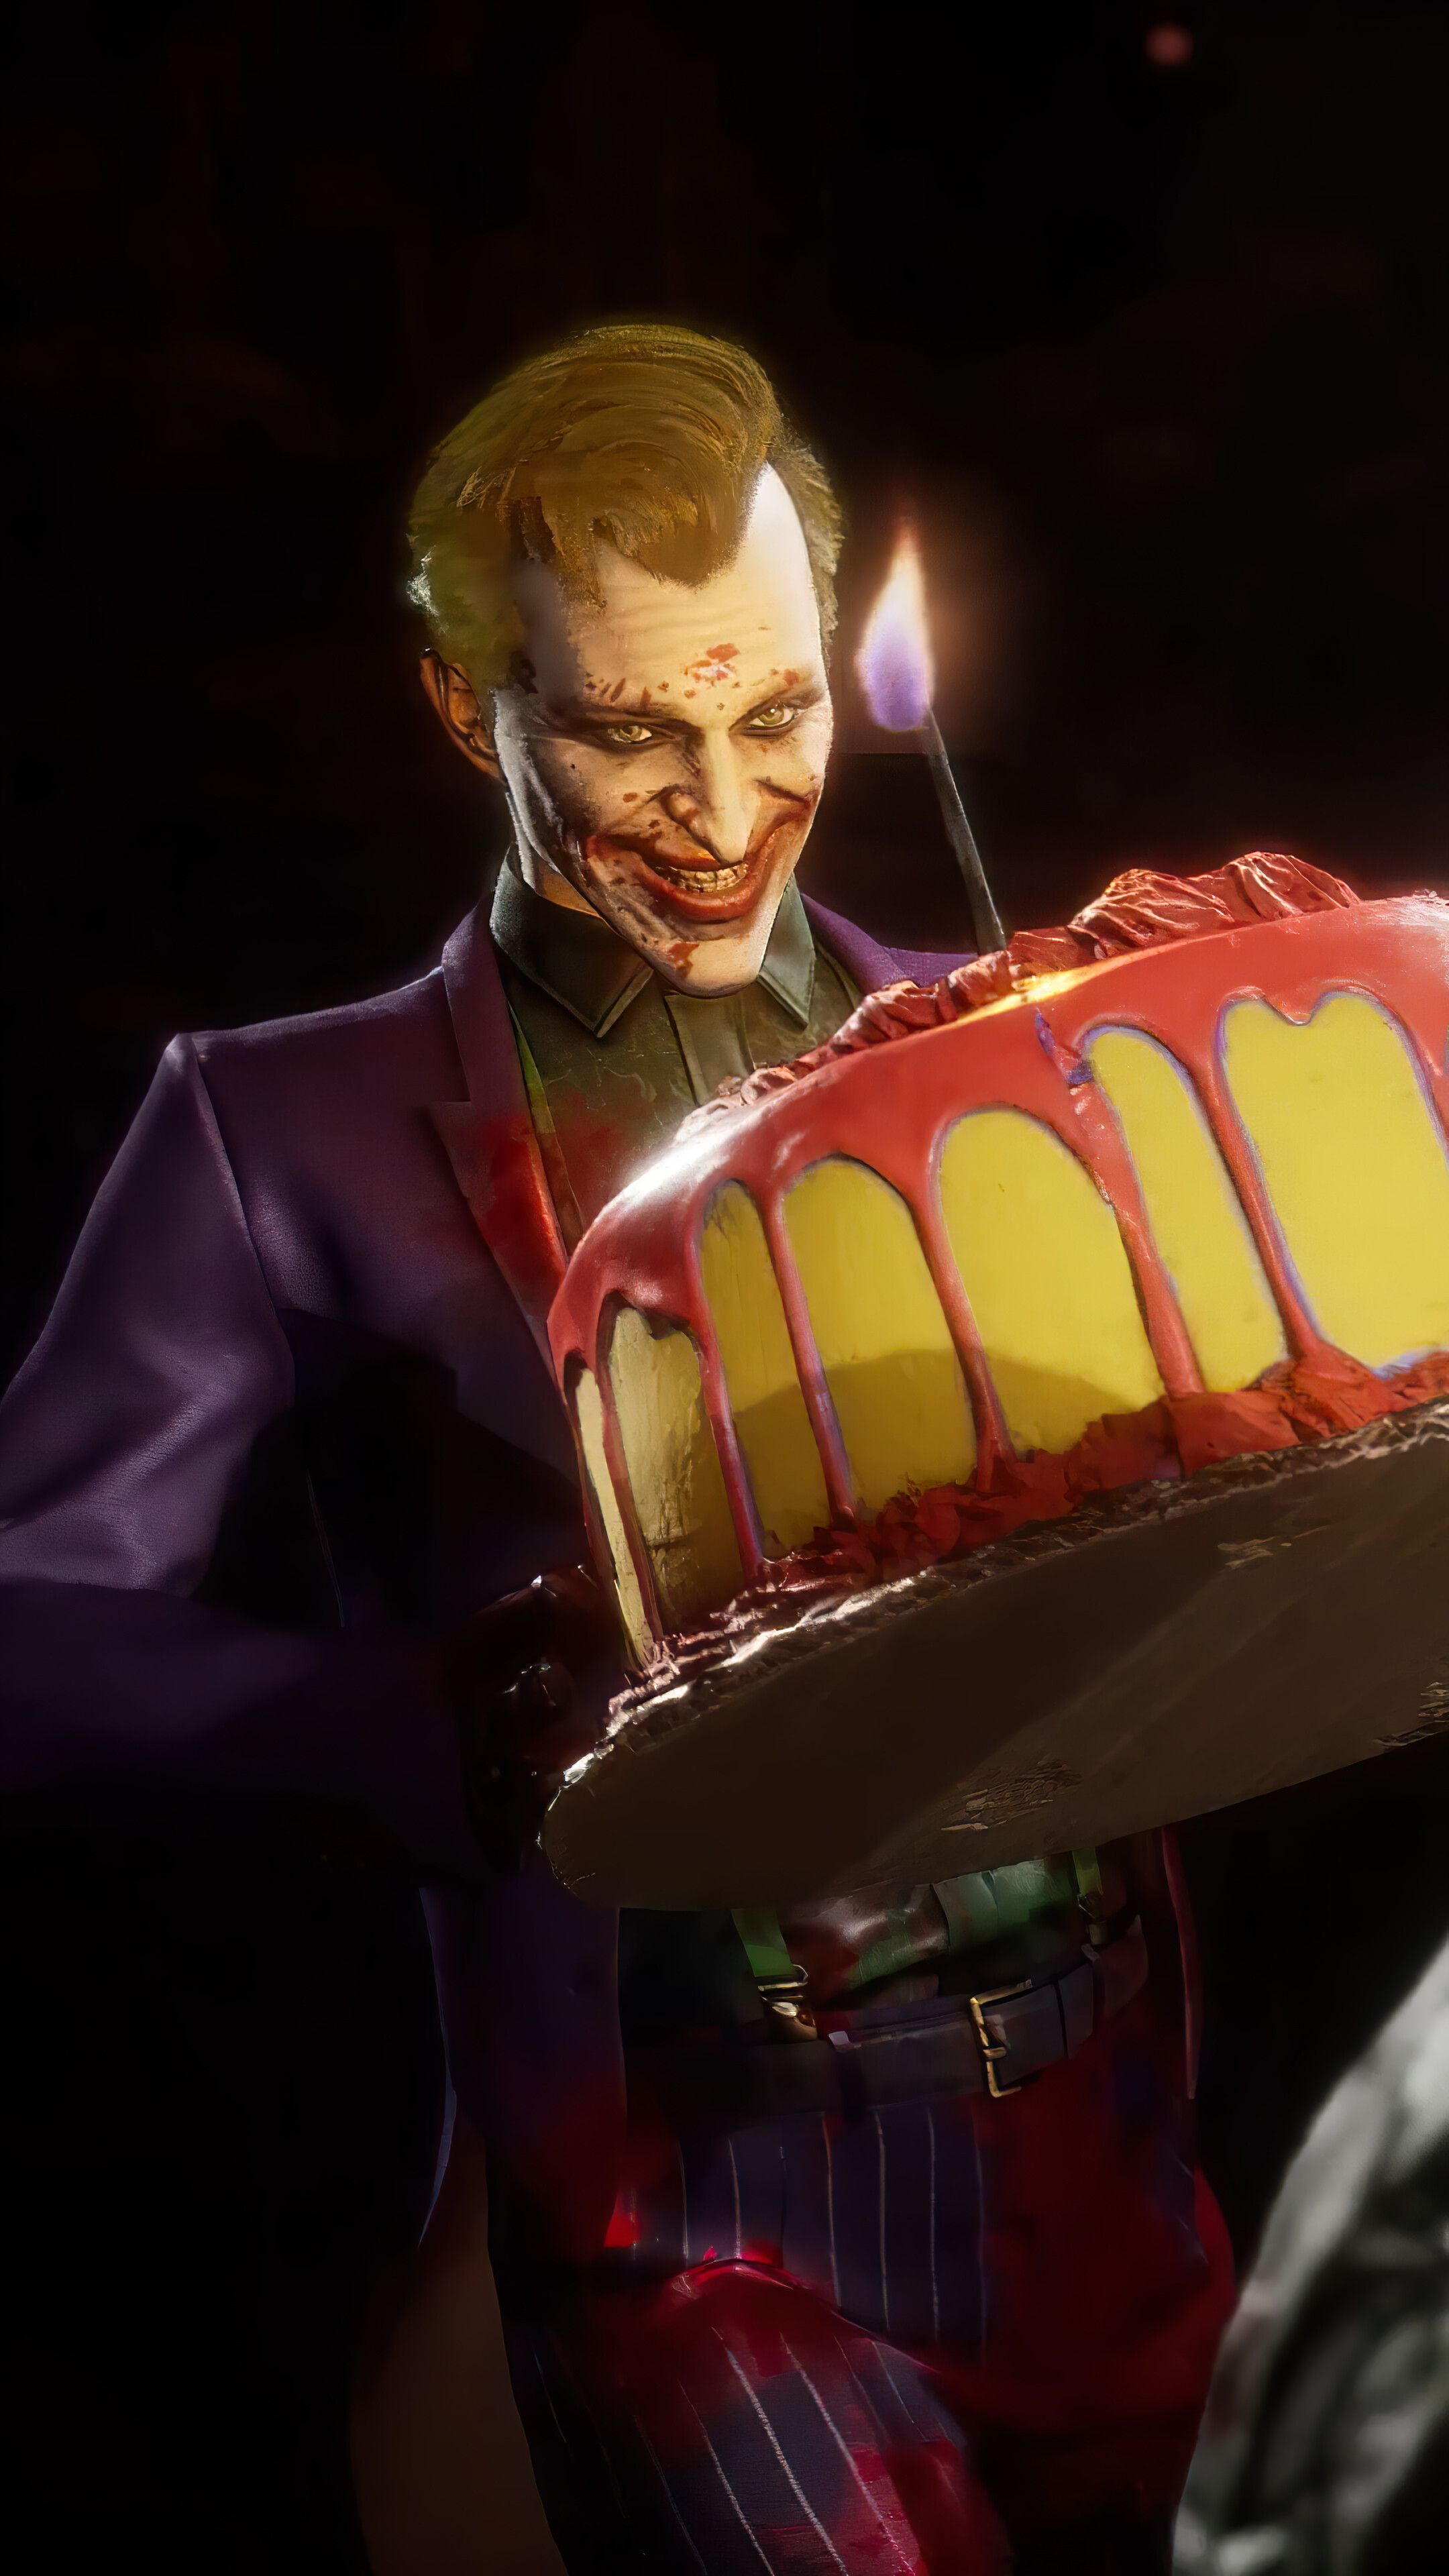 Joker, Cake, Bomb, Fatality, Mortal Kombat 4K phone HD Wallpaper, Image, Background, Photo and Picture